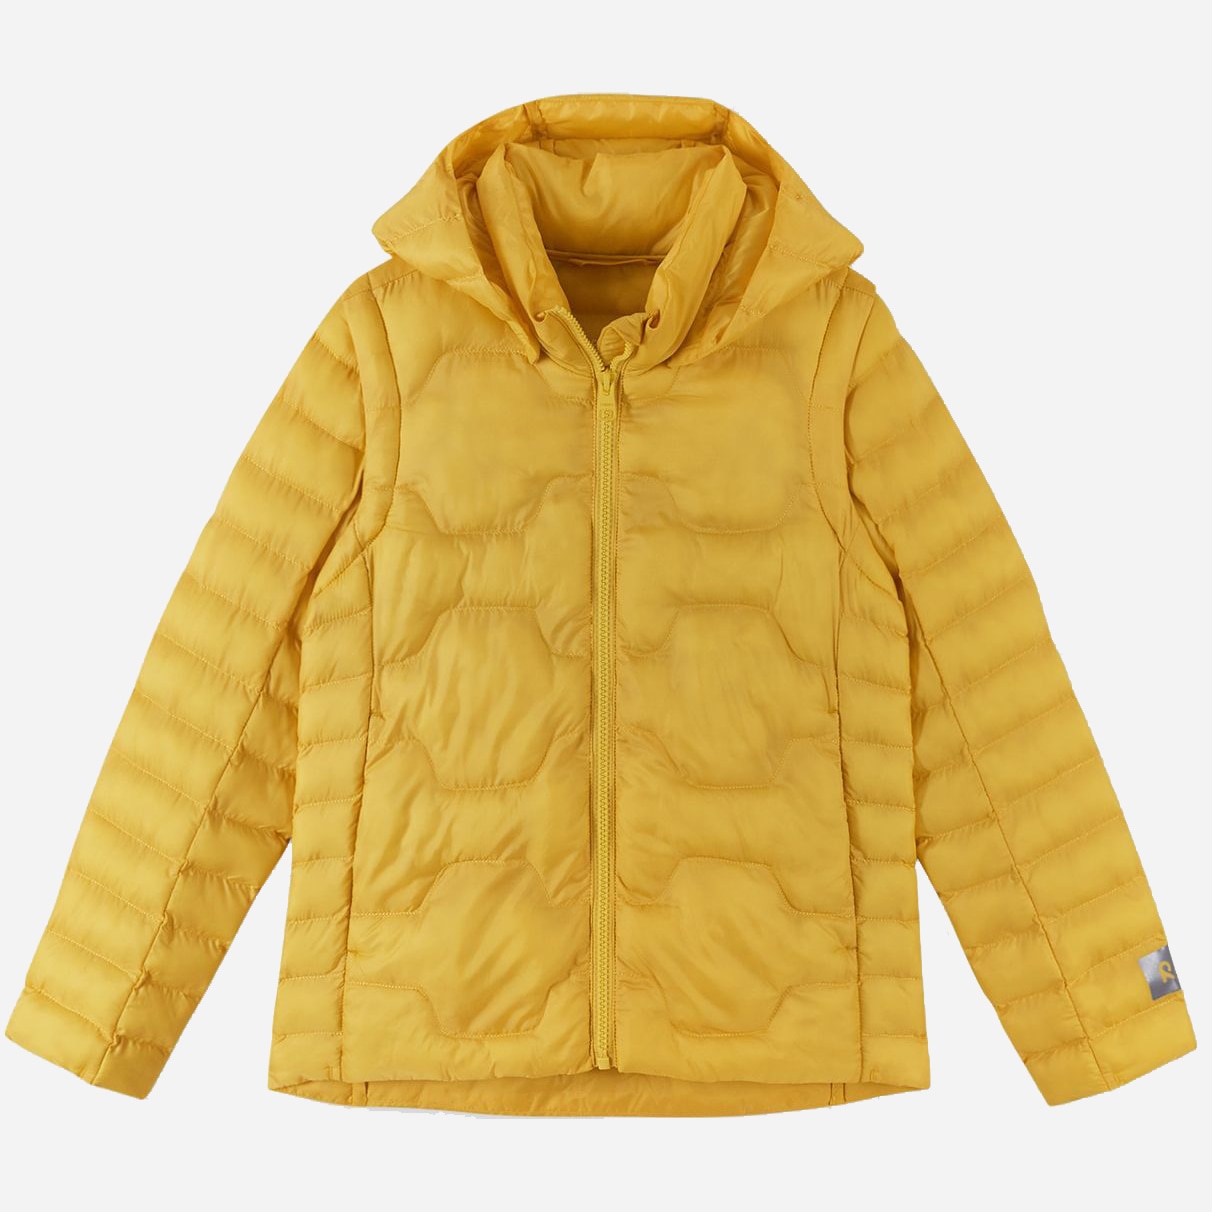 Акция на Дитяча демісезонна термо куртка для дівчинки Reima Avek 5100146C-2360 128 см от Rozetka